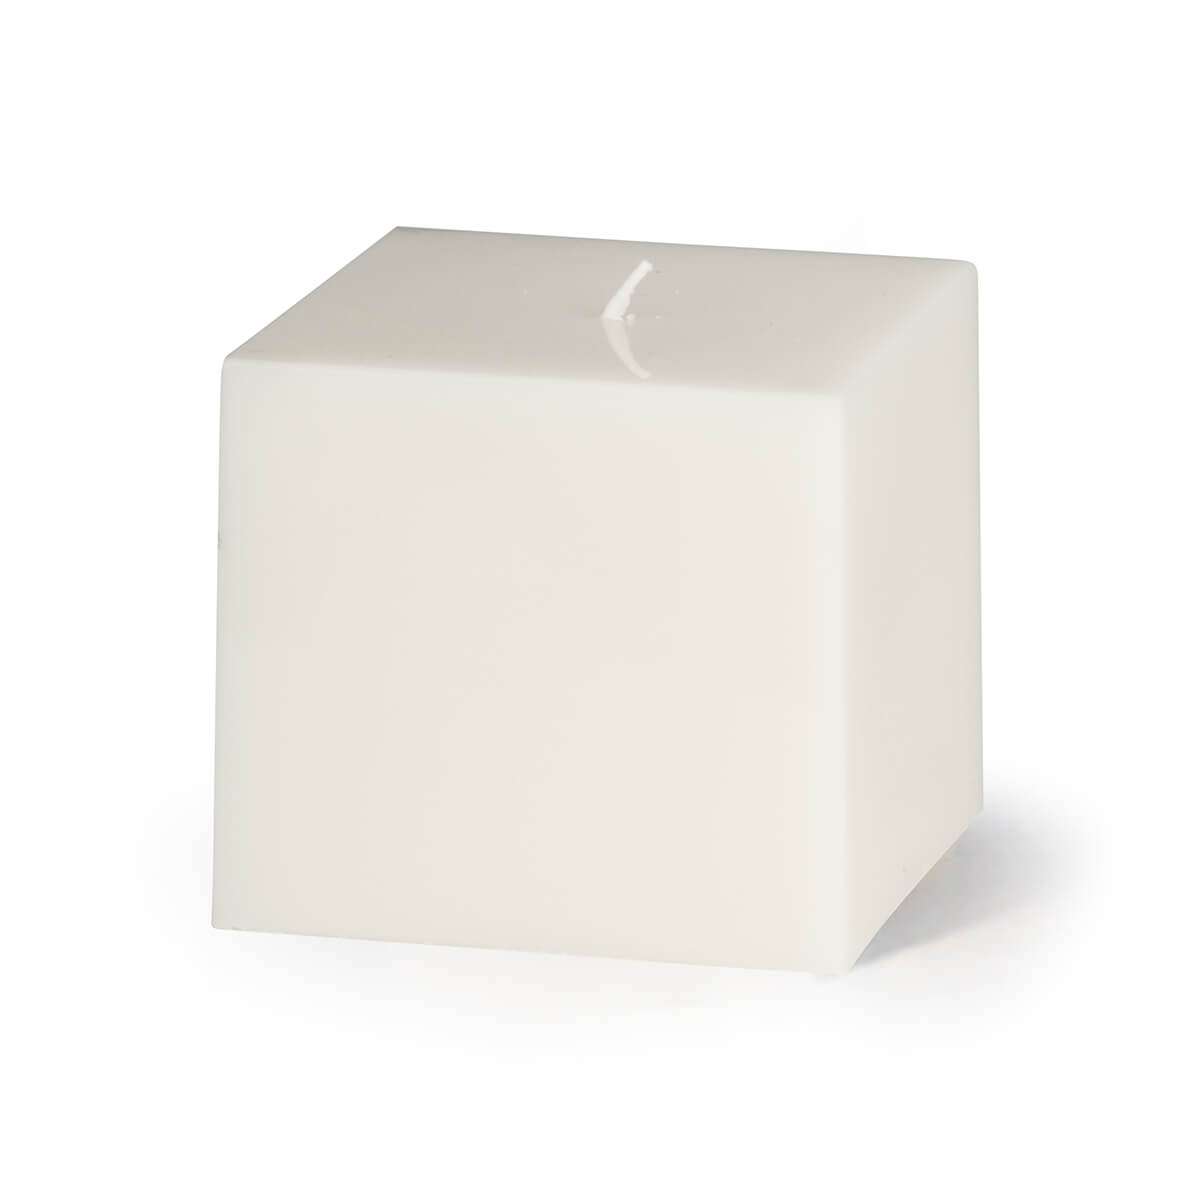 Giessform für Kerzen - Laterne Quadrat 135/125